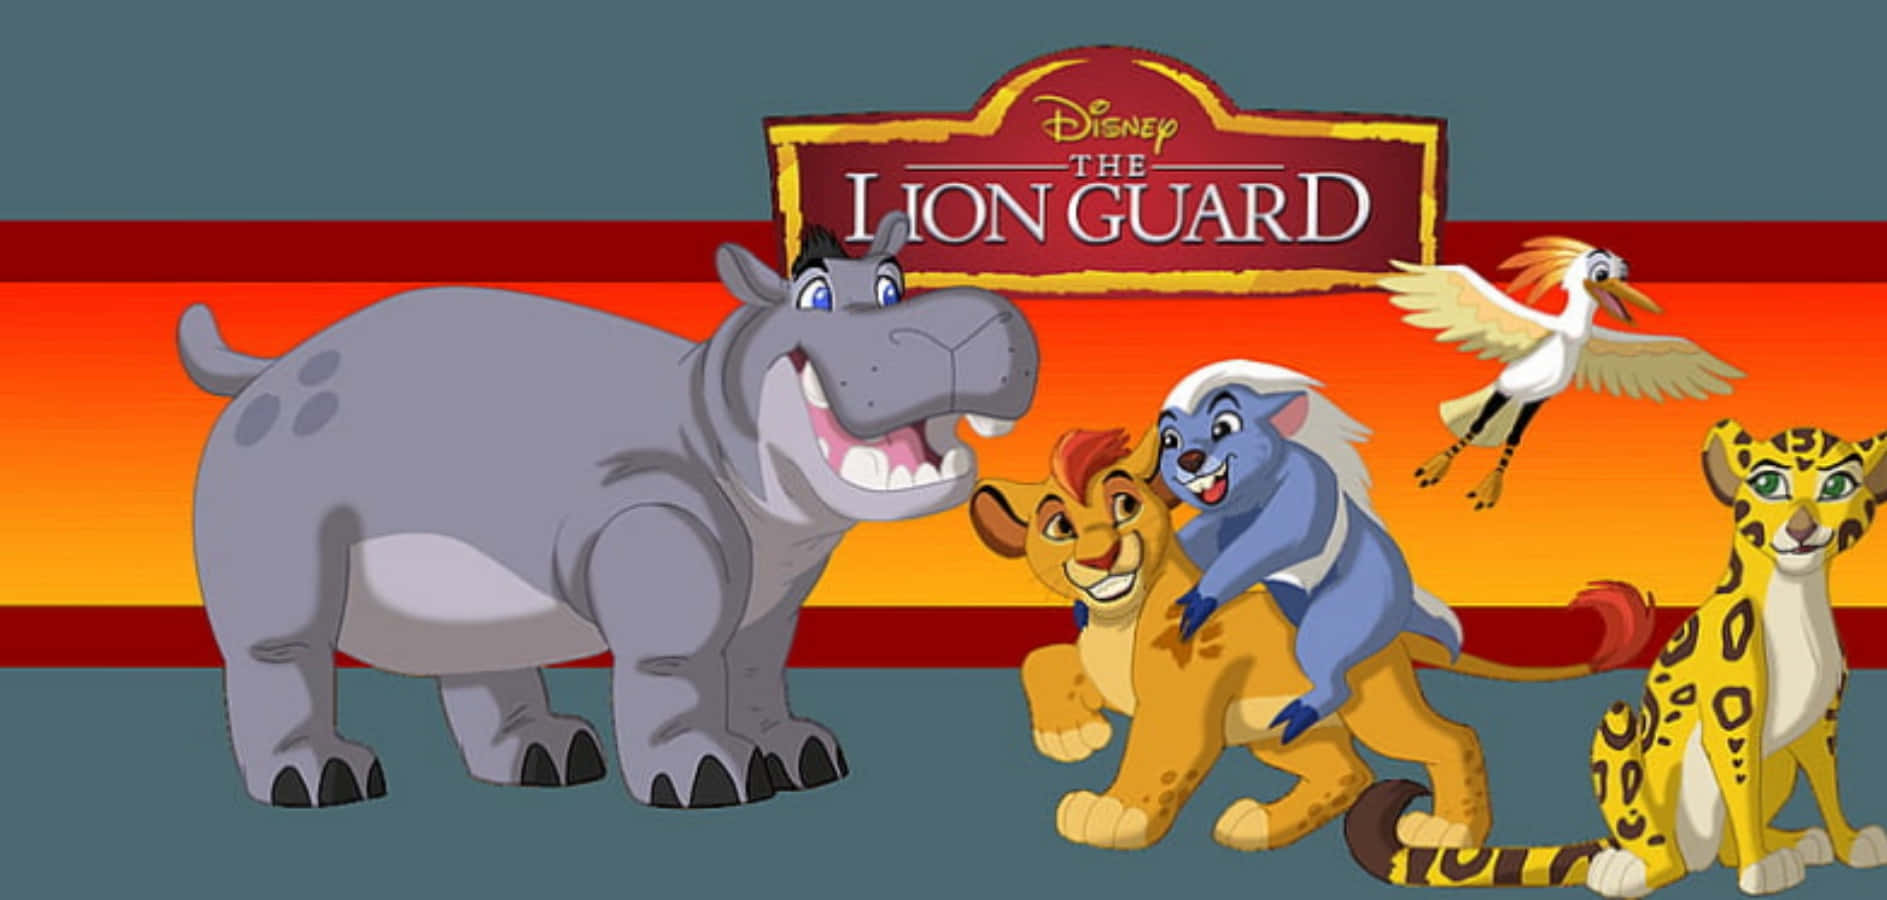 Lion Guard Disney Movie Poster Wallpaper